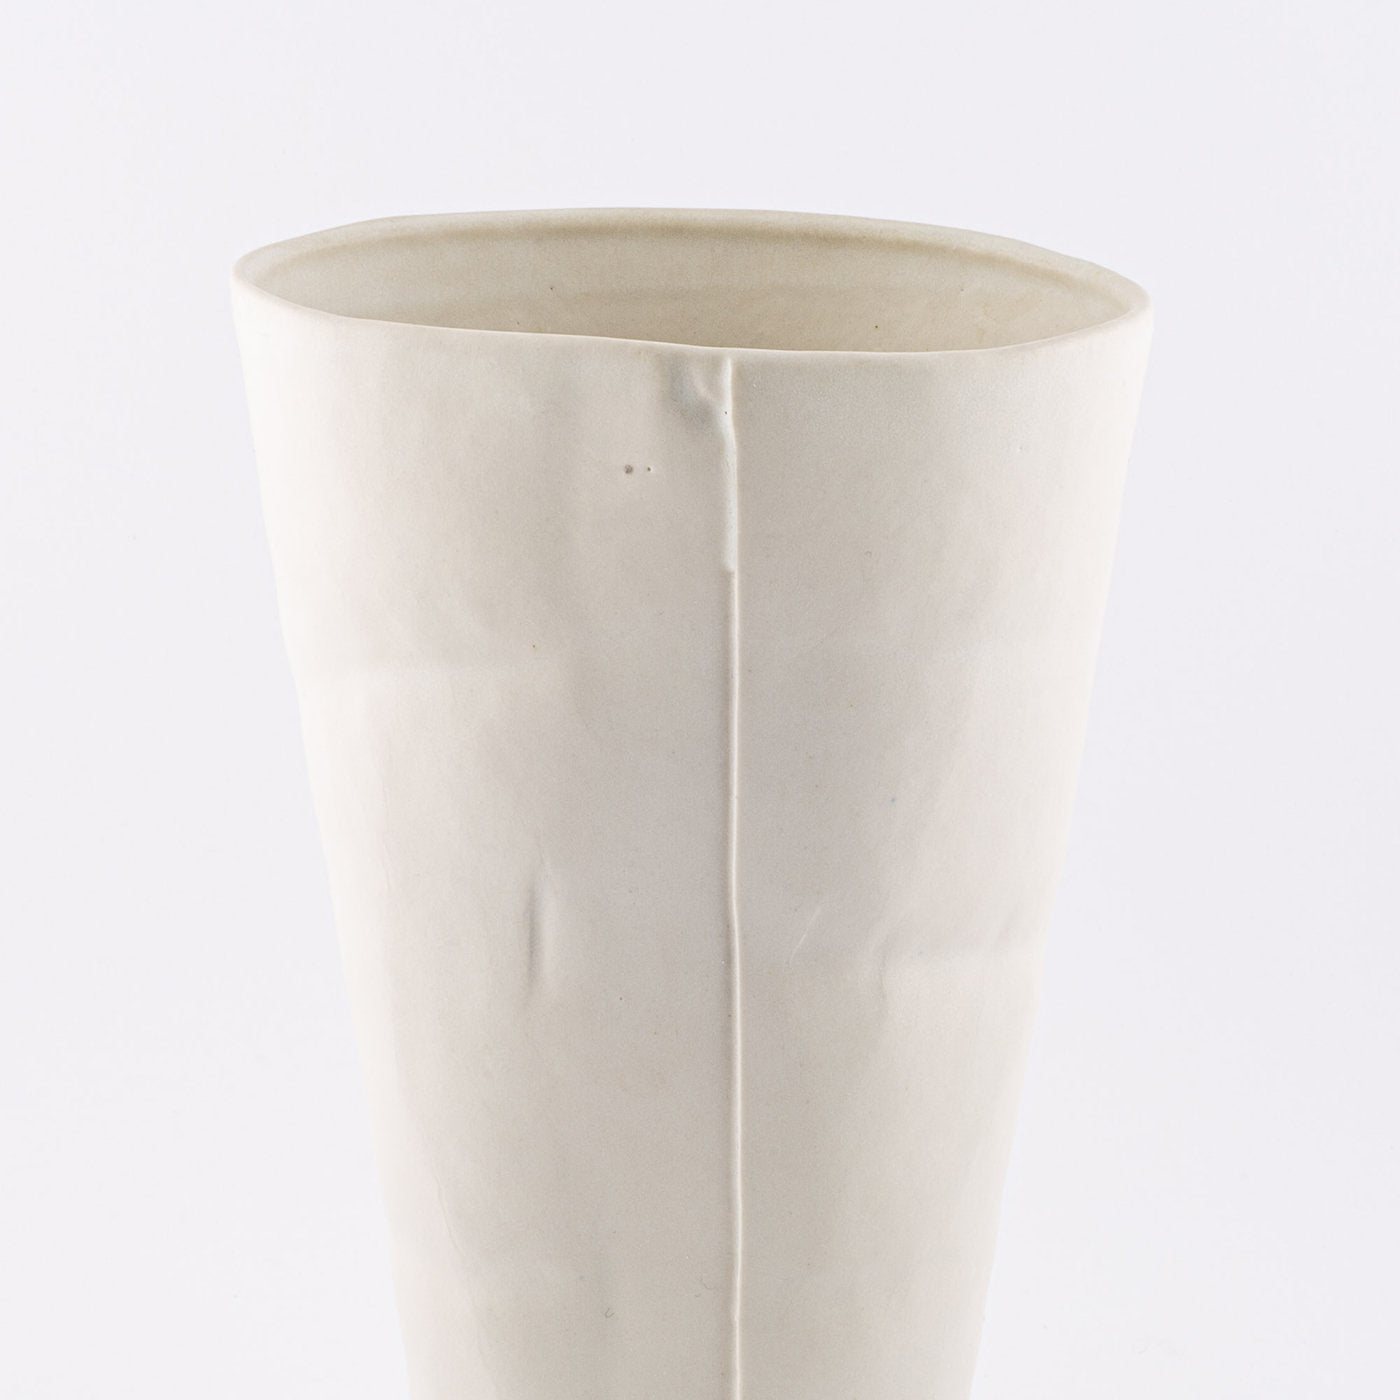 White Porcelain Vase #2 - Alternative view 1